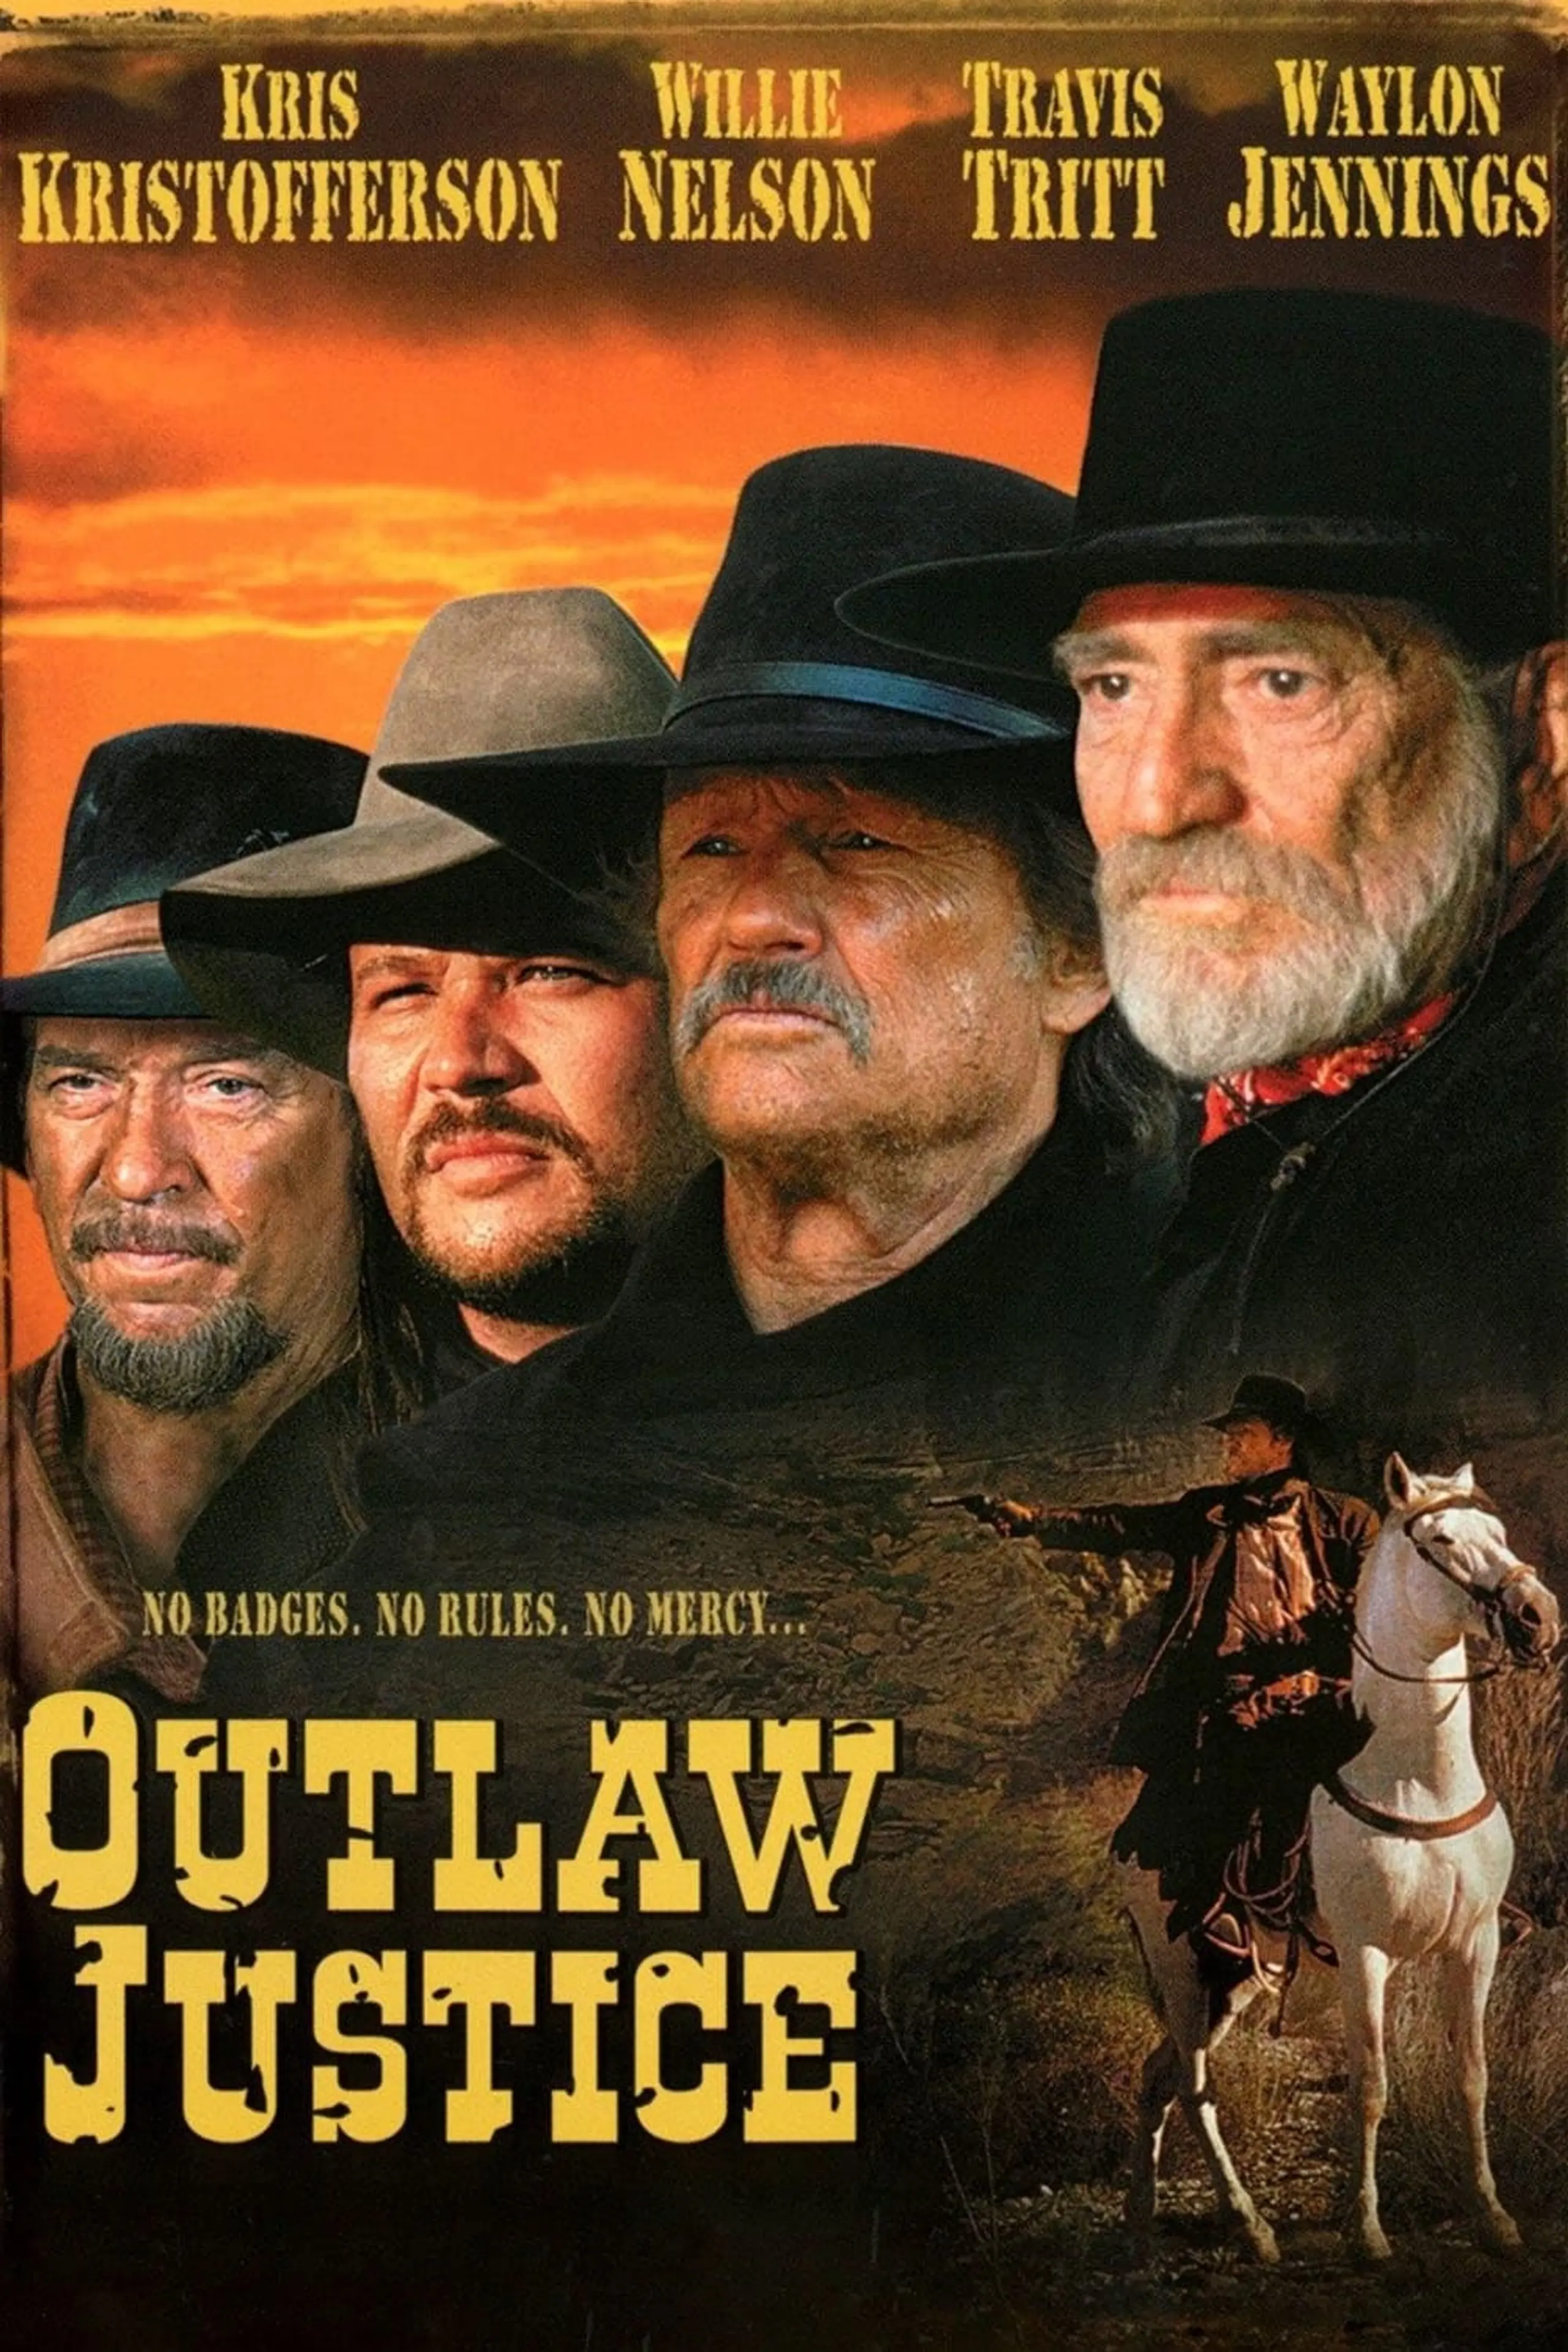 Outlaw Kill